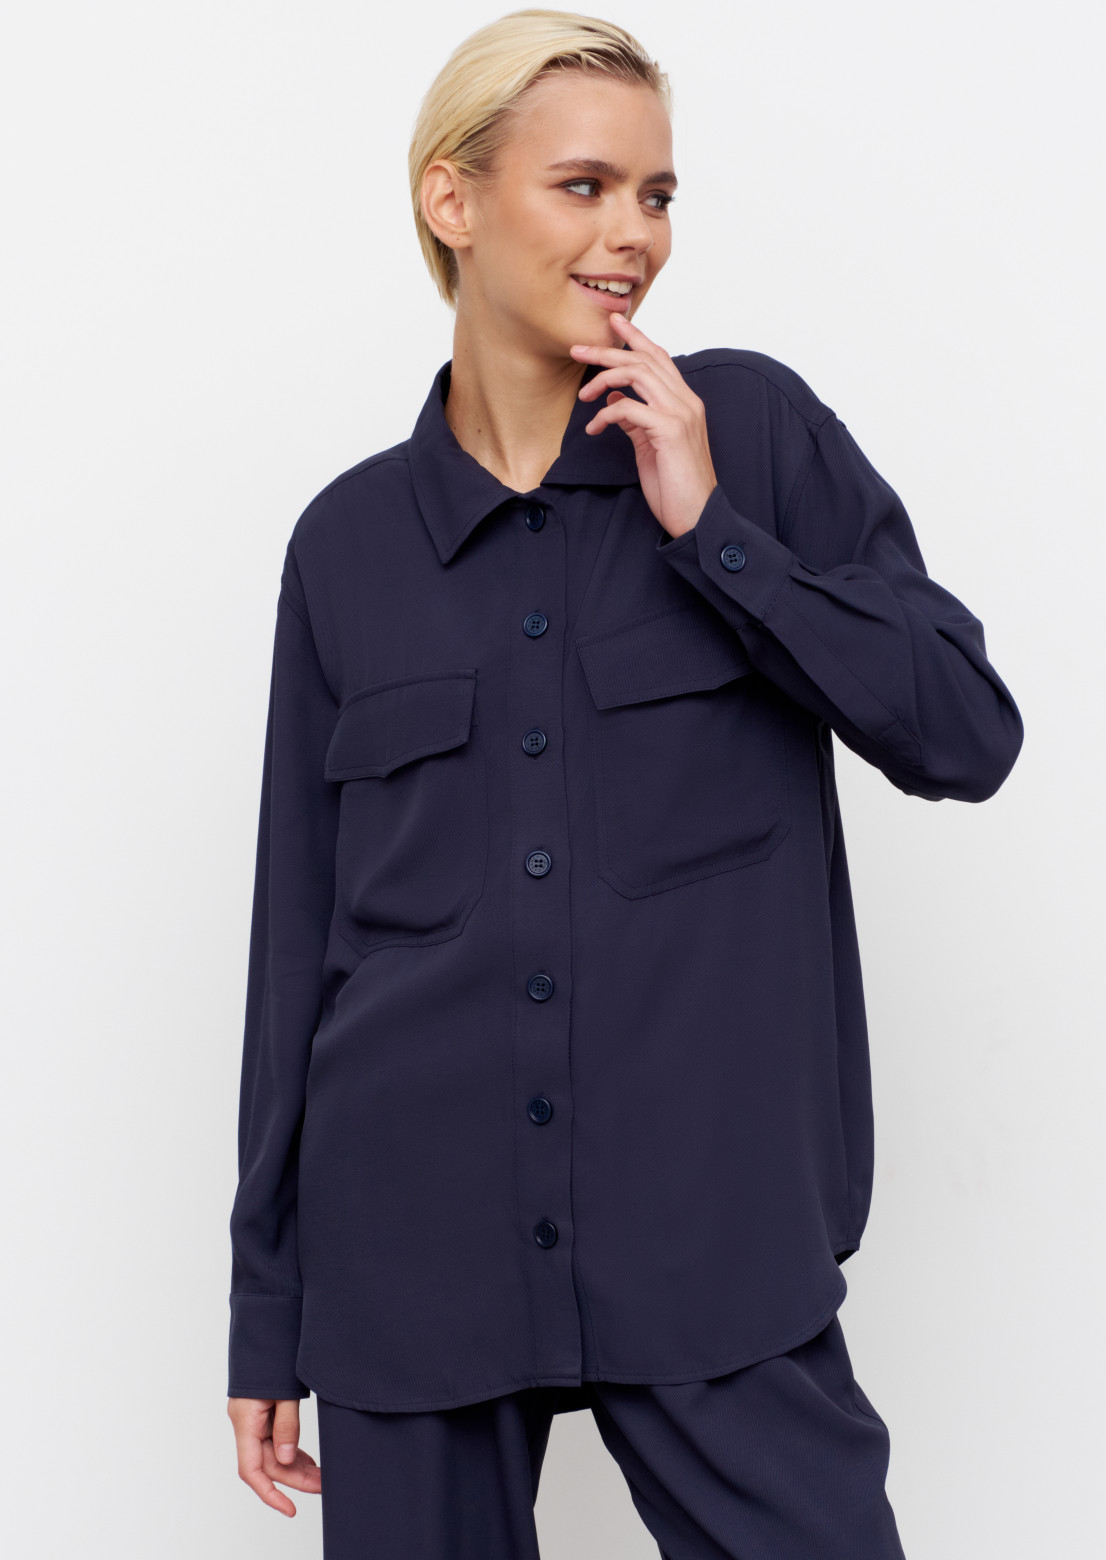 Dark blue colour shirt with pockets